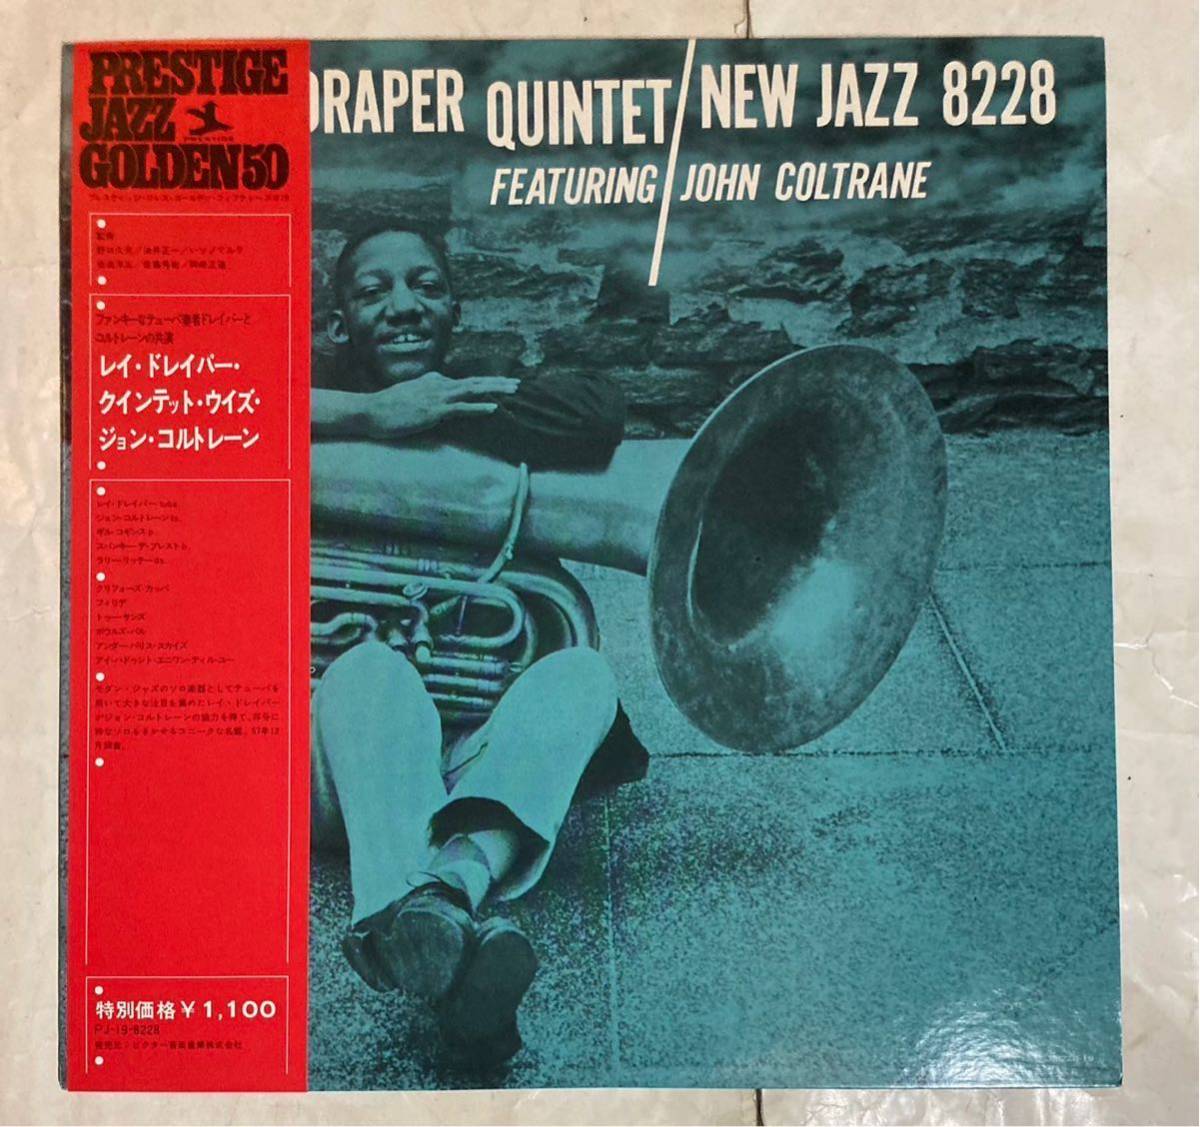 LP 1972年 国内盤 帯付 MONO The Ray Draper Quintet Featuring John Coltrane レイ・ドレイバー ジョン・コルトレーン PJ-19-8228_画像1